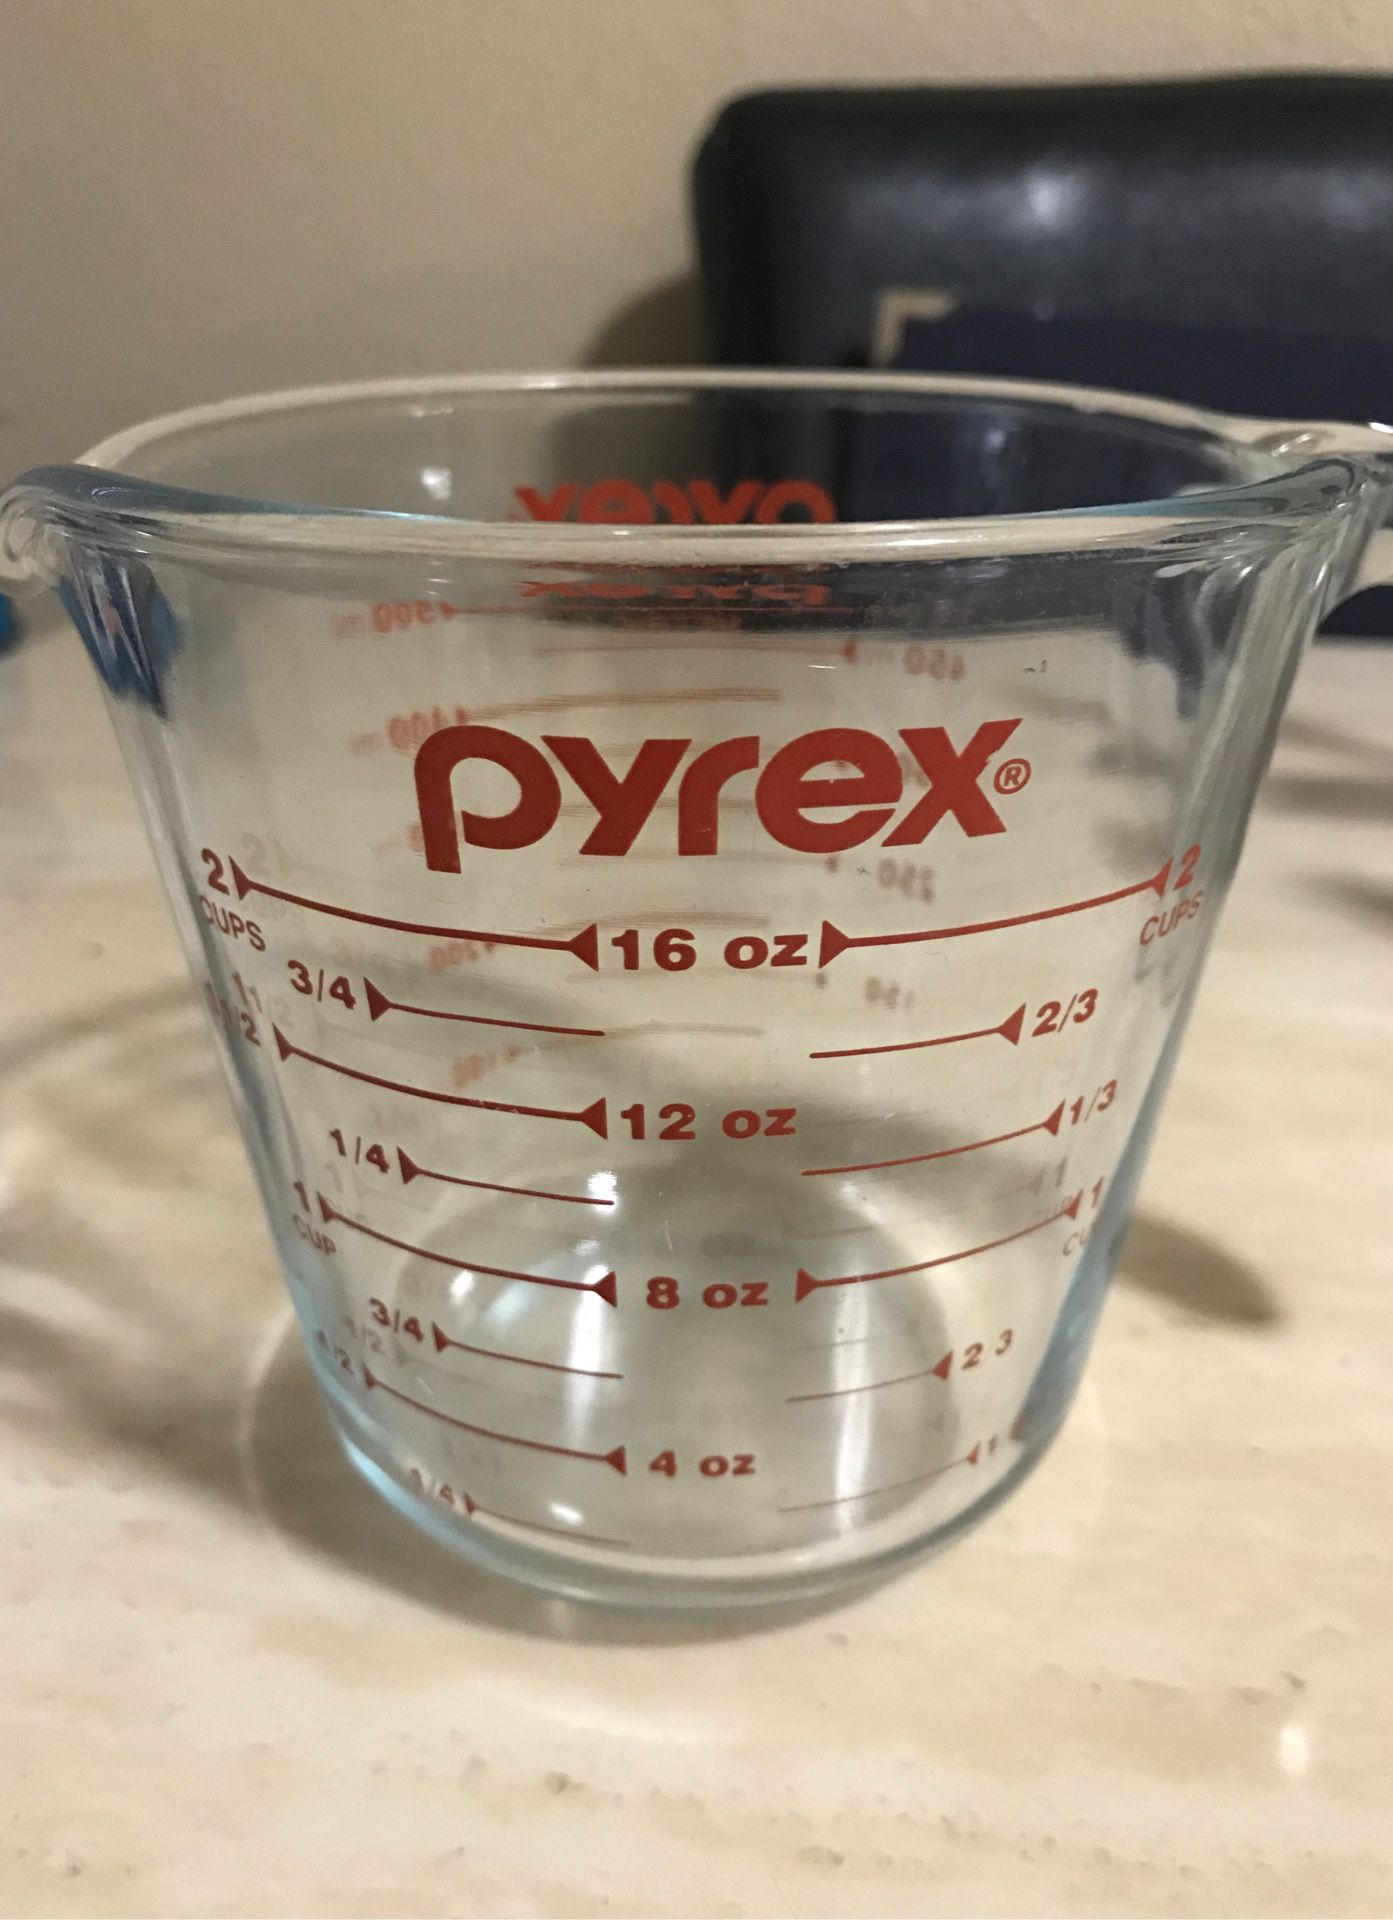 Pyrex 2 cup measuring cup